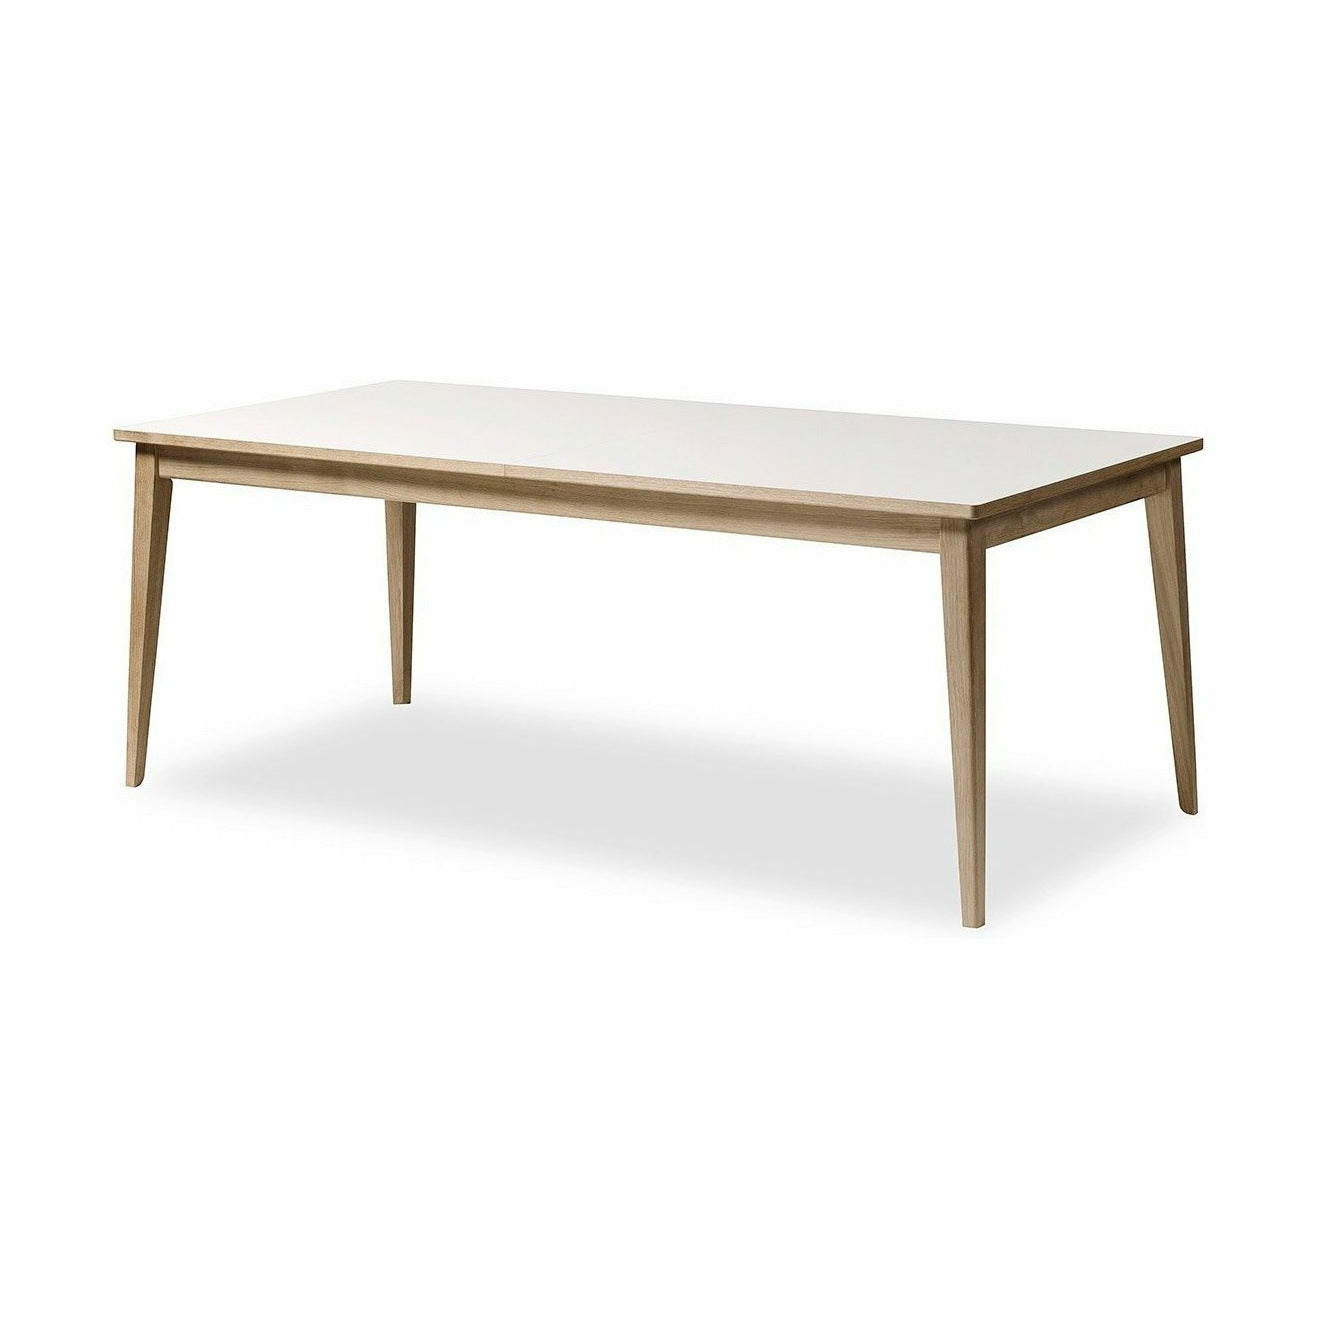 Andersen Furniture T3 Extendable Table White Laminat, Soaped Oak, 200cm